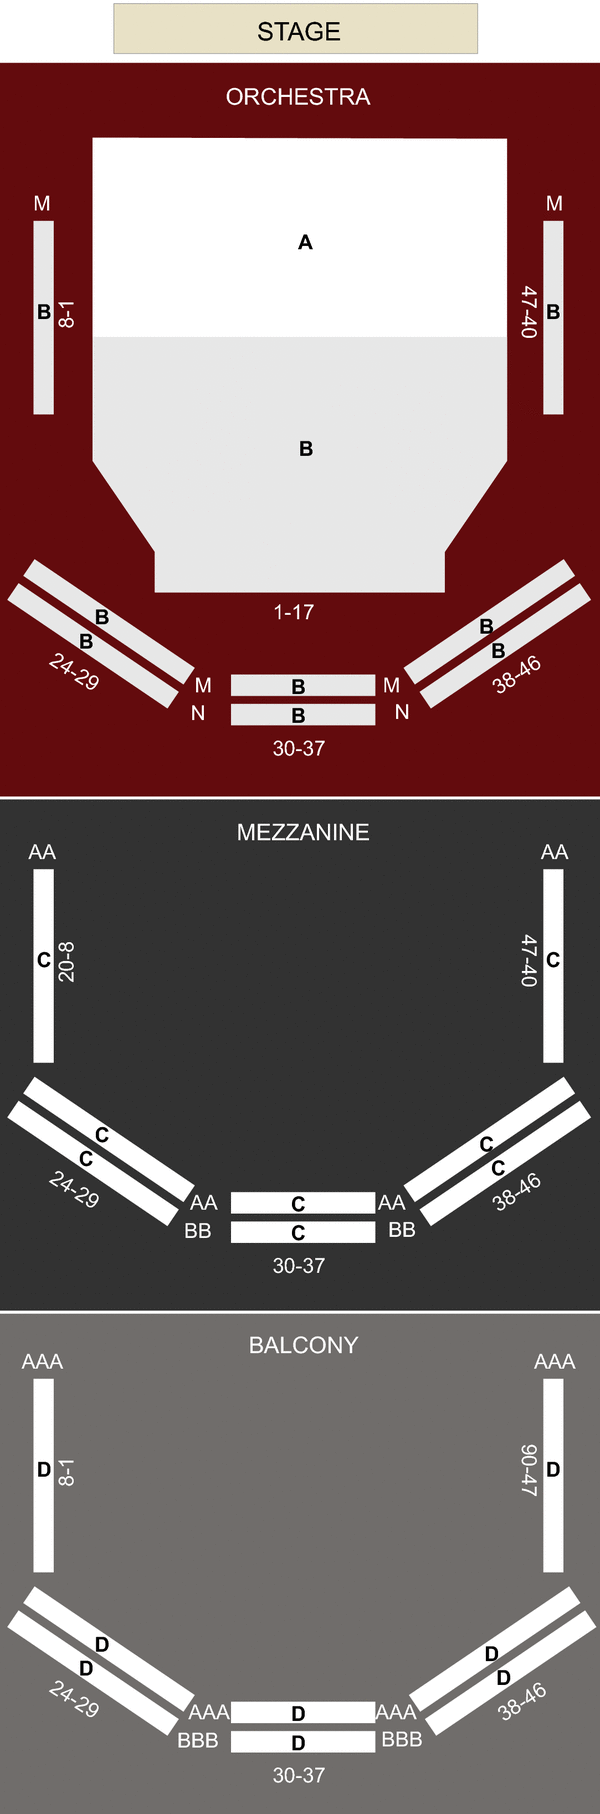 Goodman Seating Chart